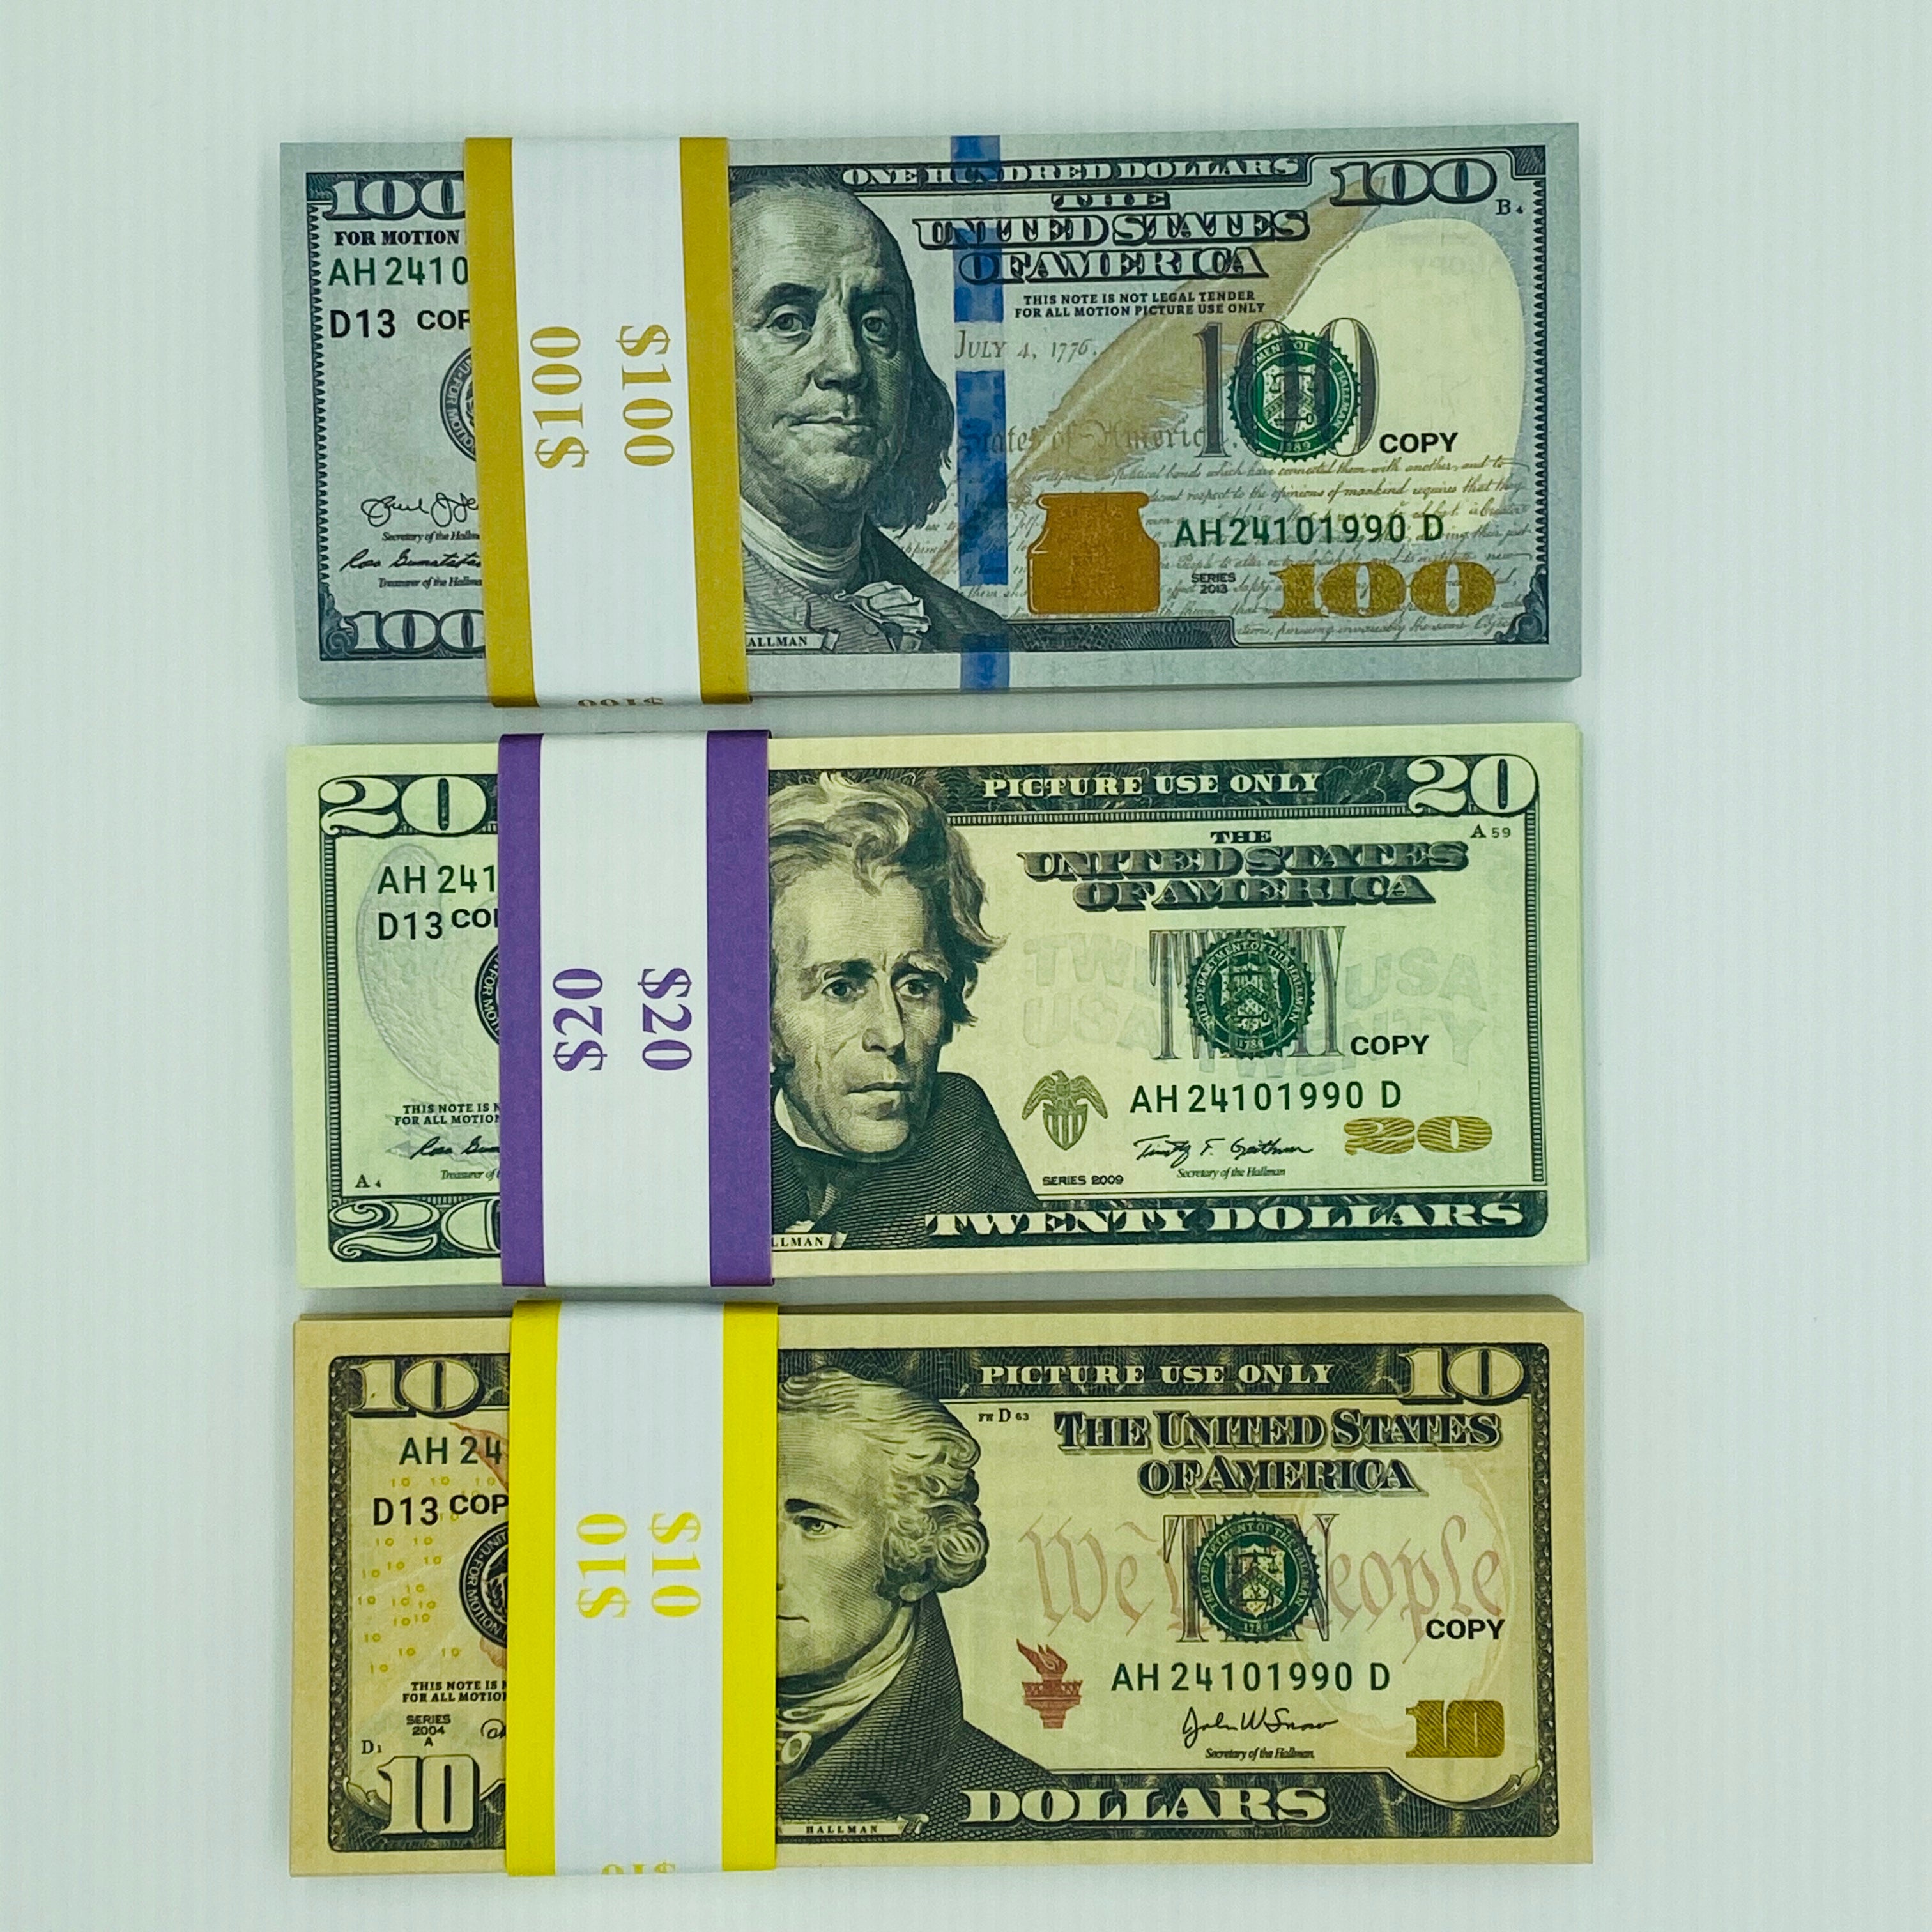 Fake Money 300 PCS Prop Money 100 Dollar Bills Realistic, Full Print 2  Sided Play - Paper Money, Facebook Marketplace